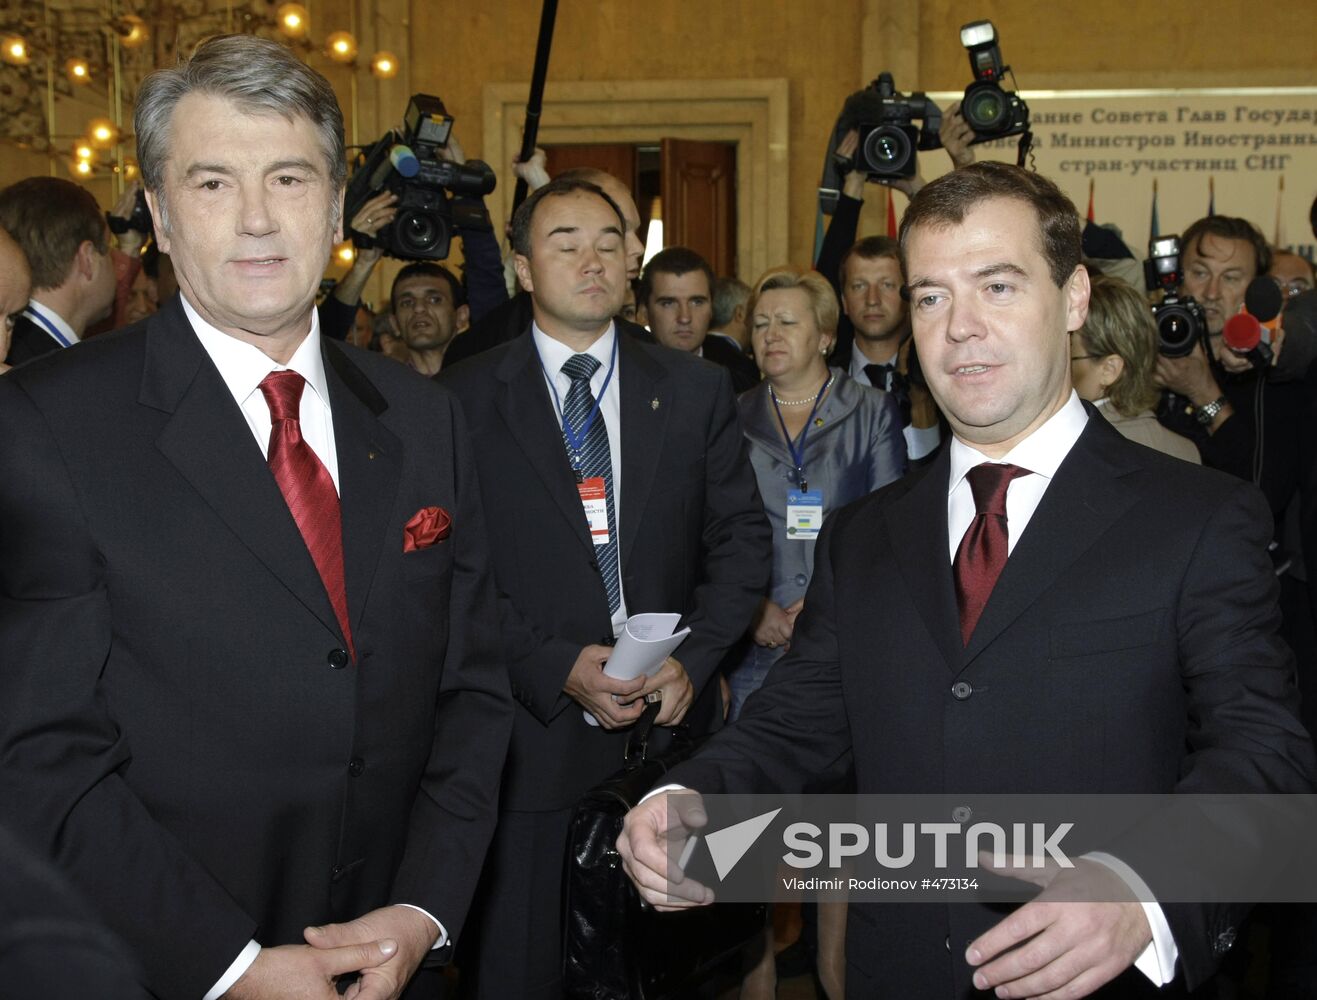 Dmitry Medvedev attending CIS summit